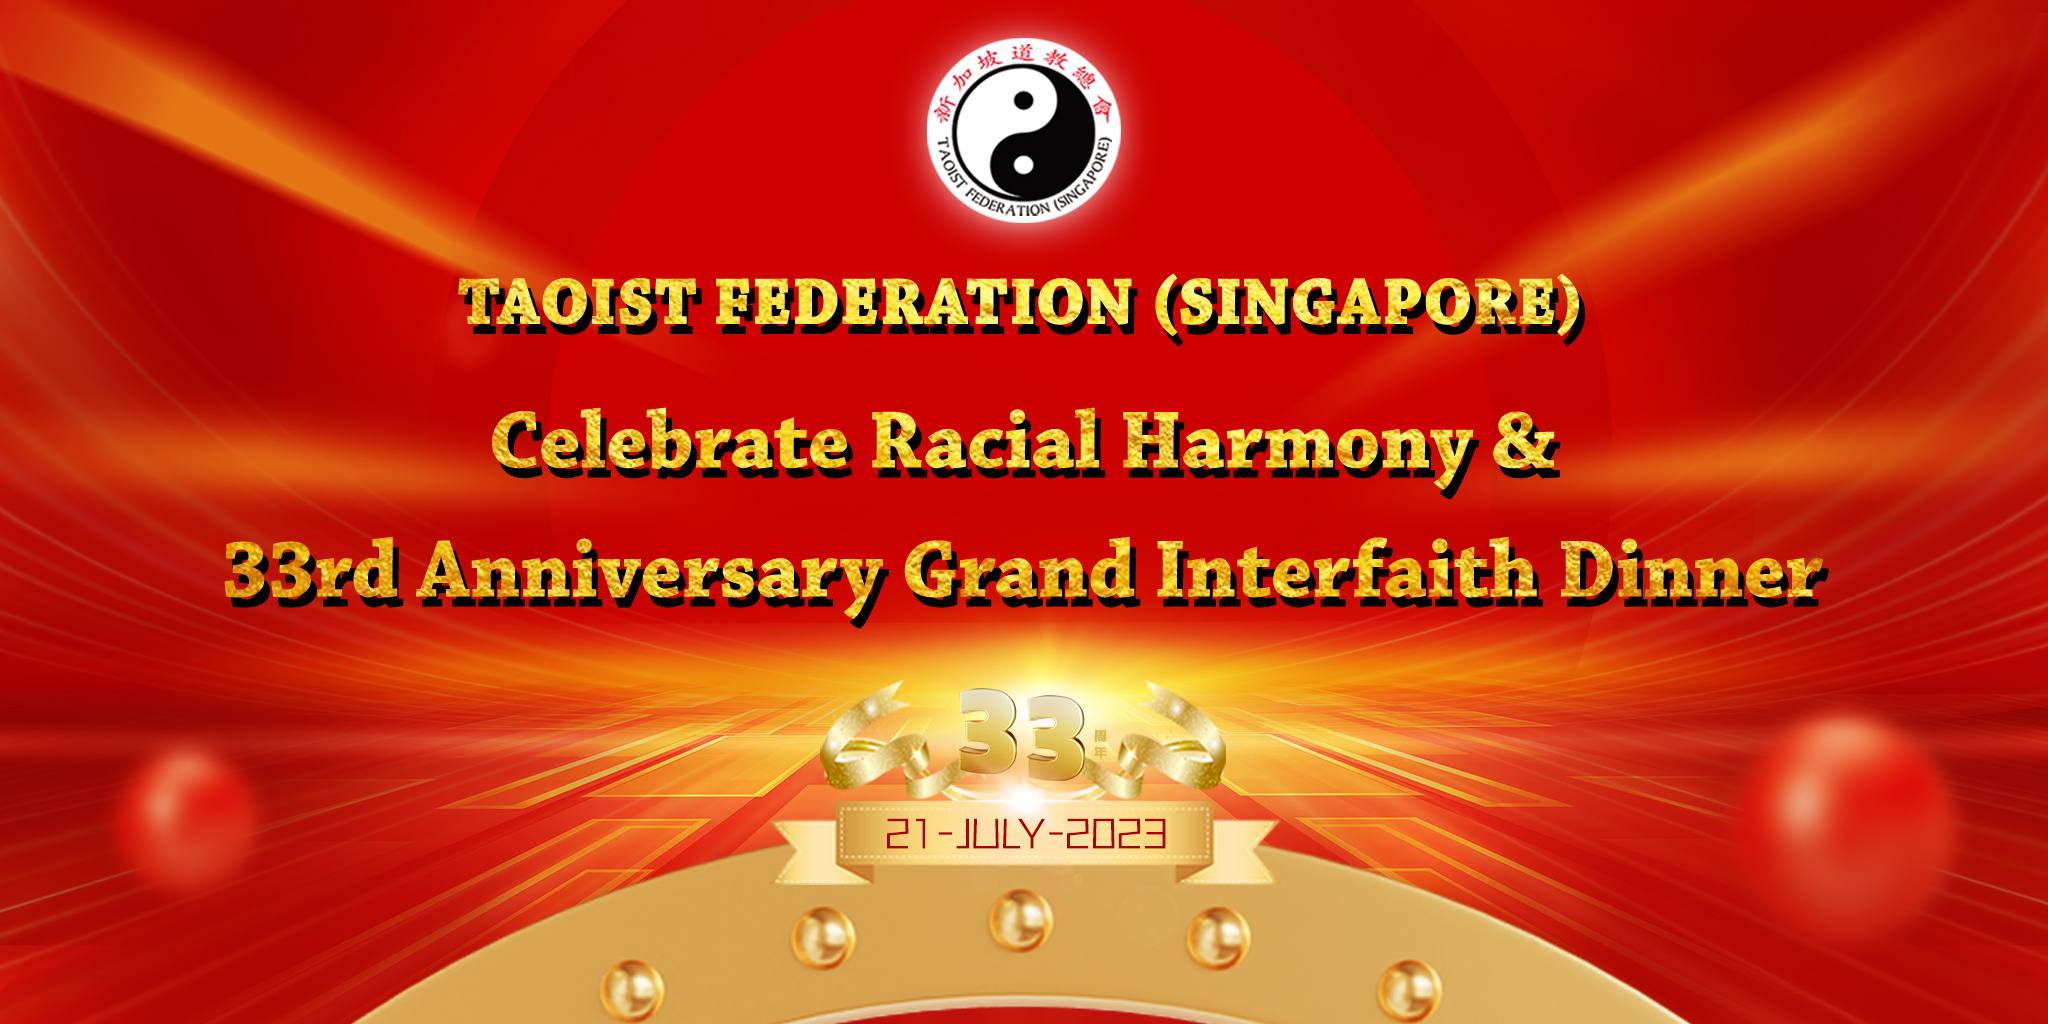 Taoist Federation (Singapore) Celebrate Racial Harmony & 33rd Anniversary Grand Interfaith Dinner